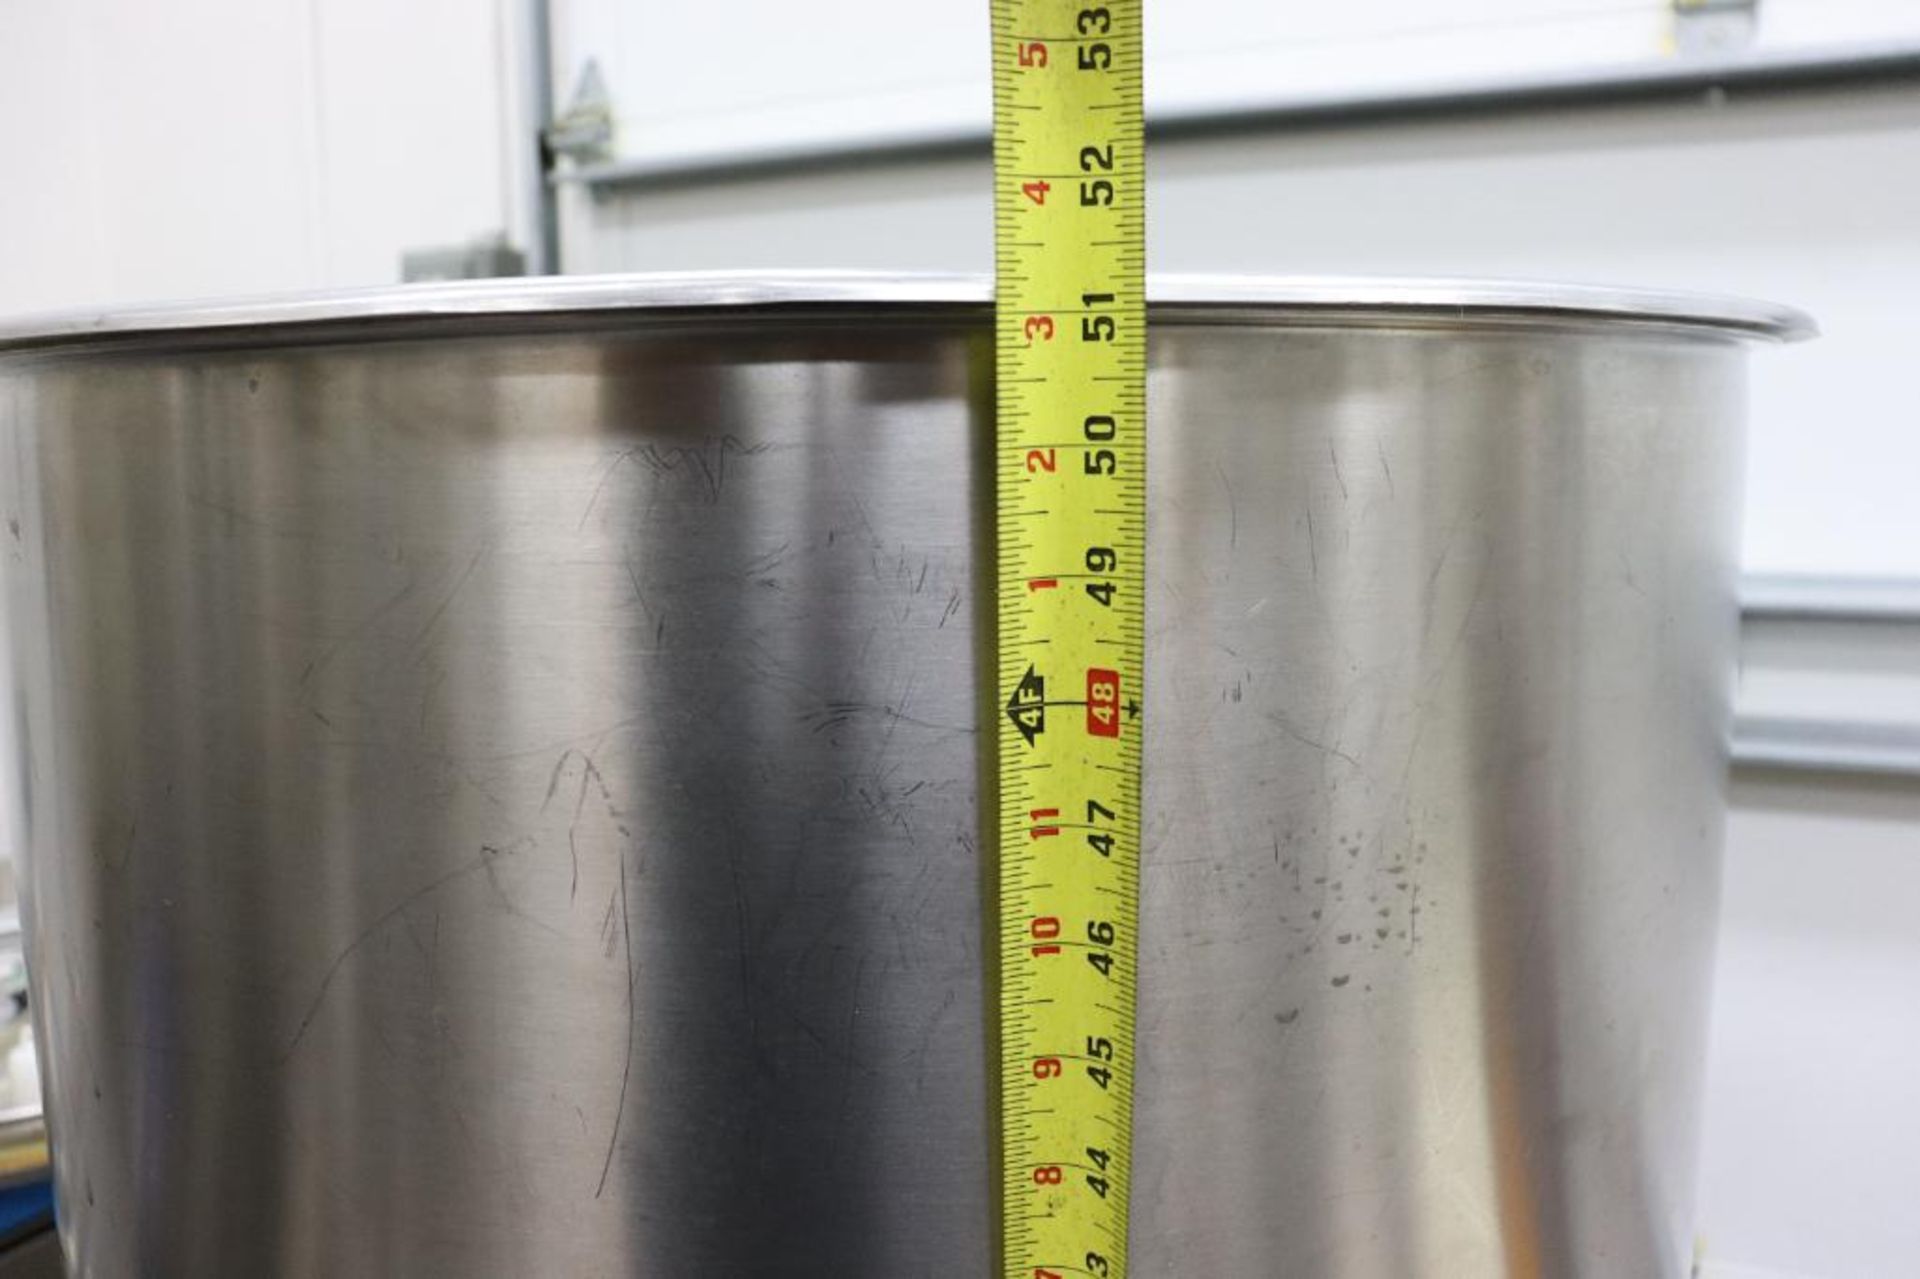 400 liter variable capacity wine fermenting tank - Image 12 of 13